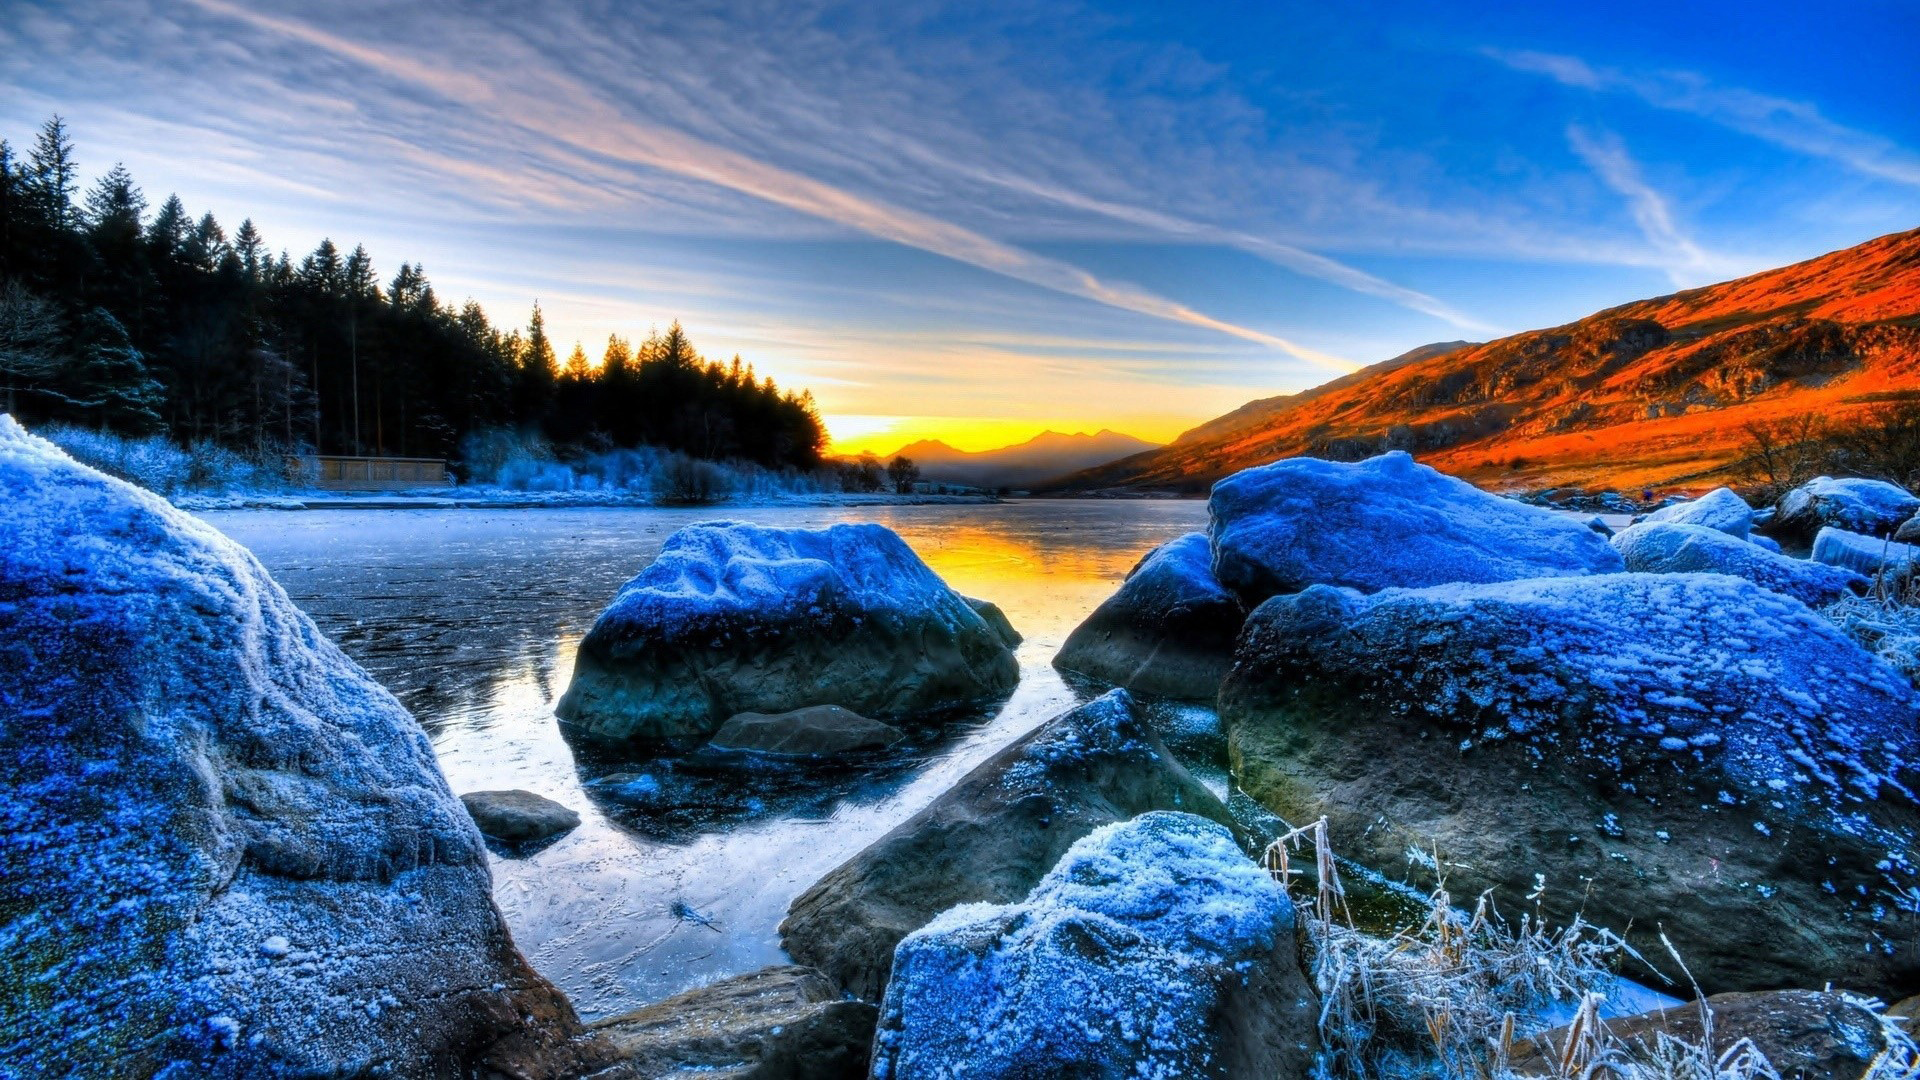 Frozen Rocks On River Landscape View Of Trees In Sunrise Wallpaper Under Blue Sky 2K Nature